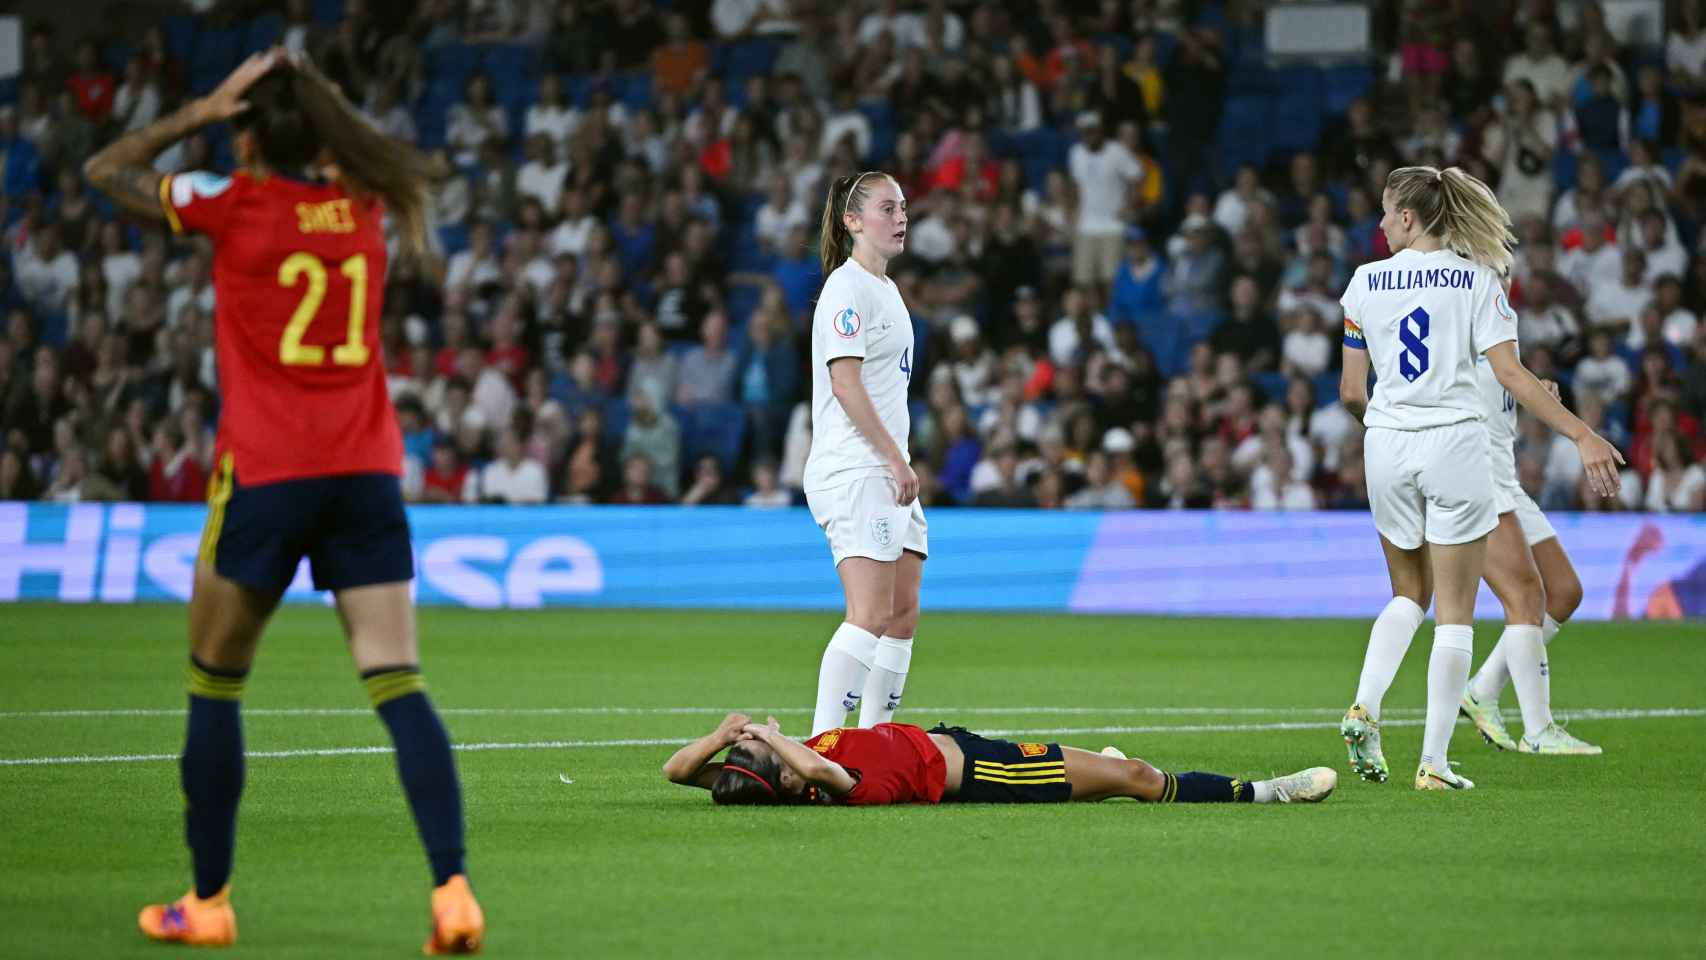 España cae en la prórroga y con gran polémica frente a Inglaterra en la Eurocopa femenina thumbnail